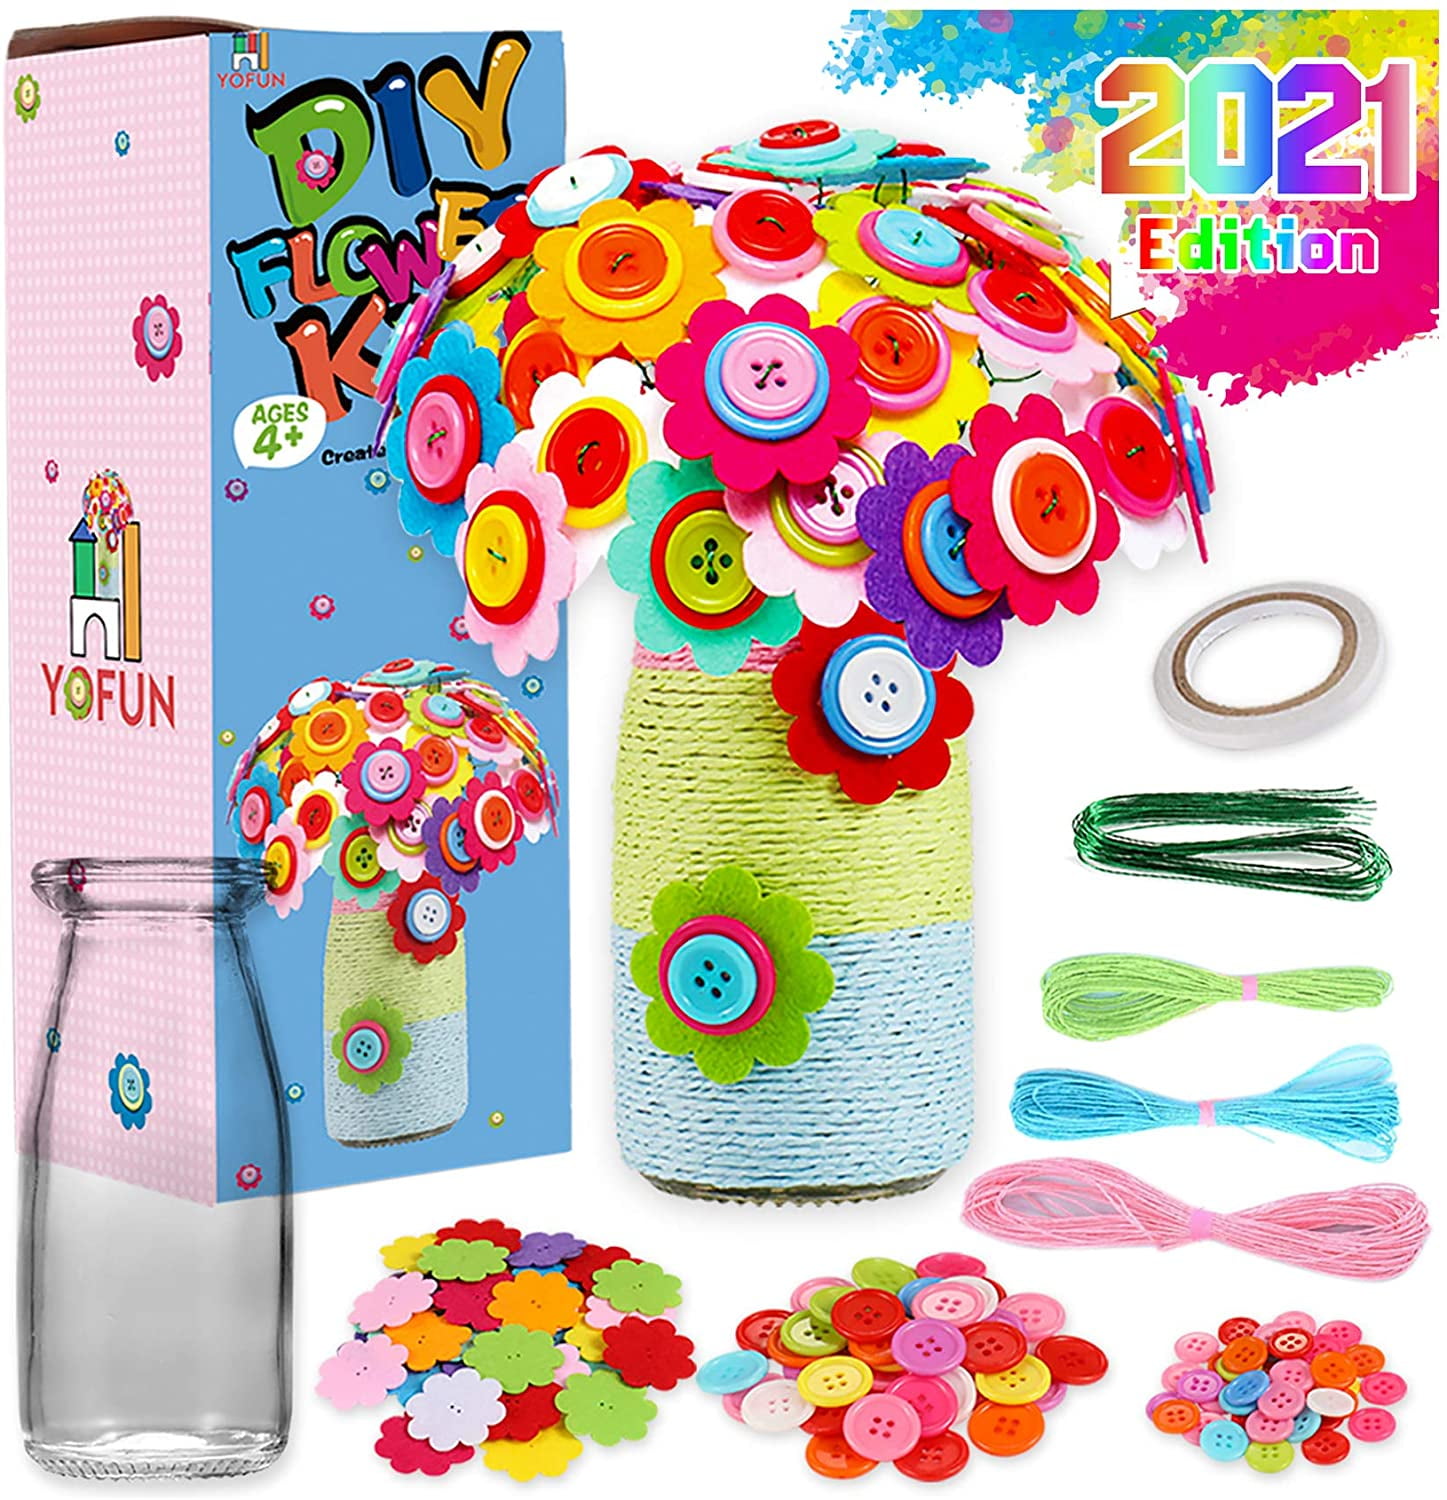  Pom Pom Arts & Crafts Kit For Toddlers - Easy